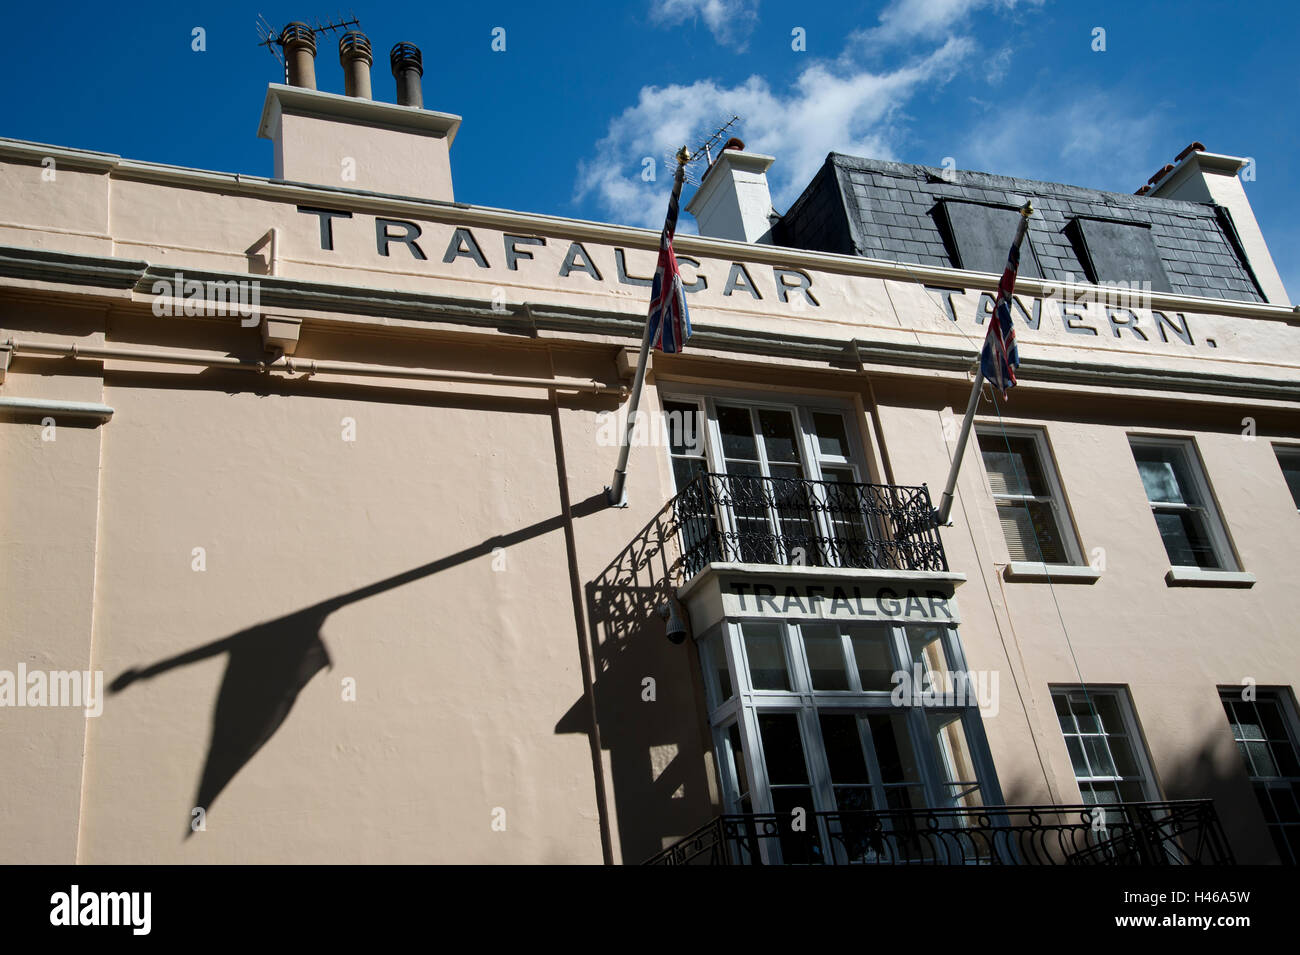 Trafalgar Tavern,Greenwich Stock Photo